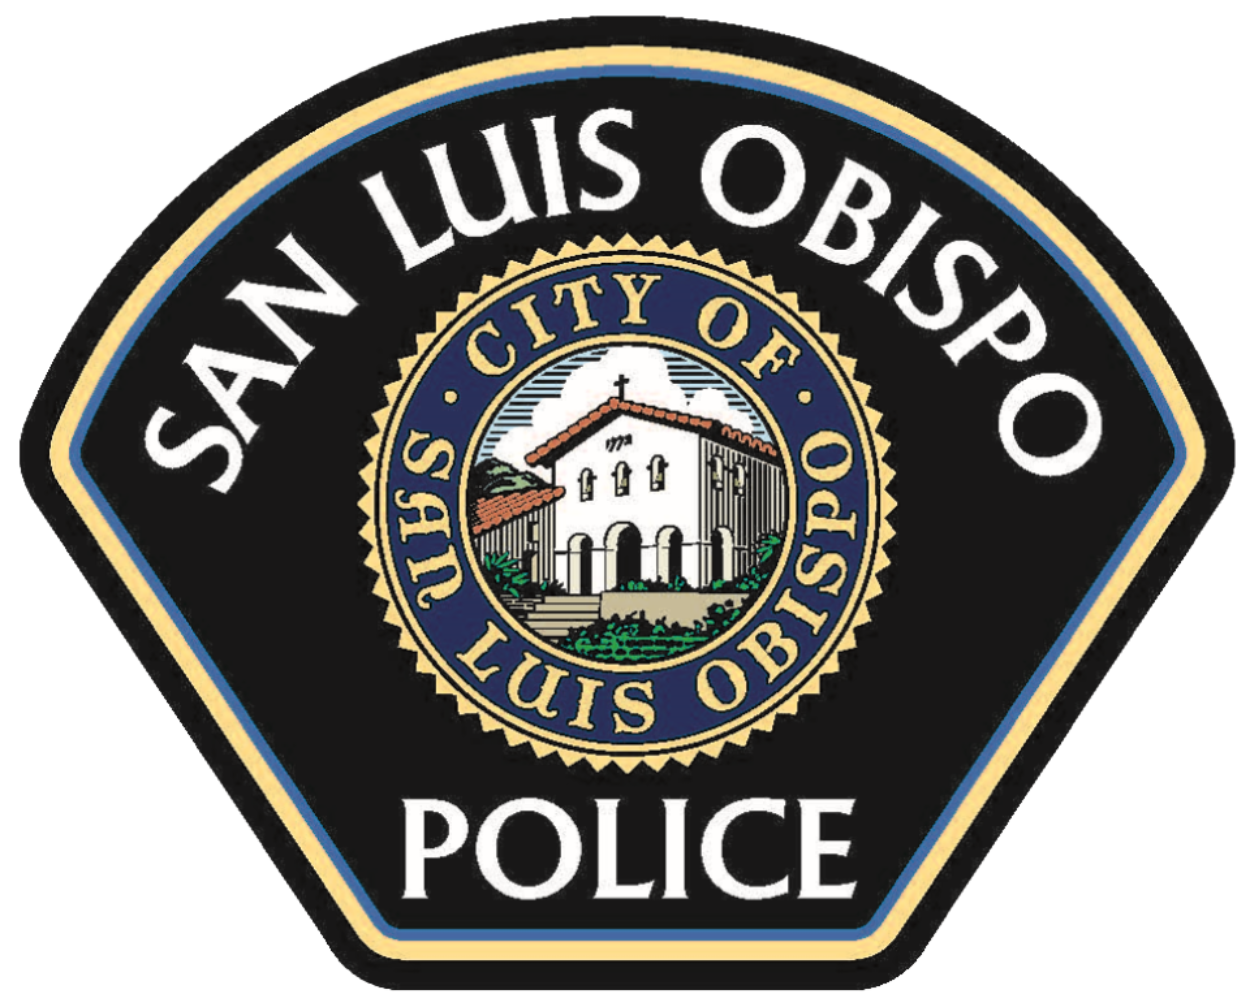 San Luis Obispo Police